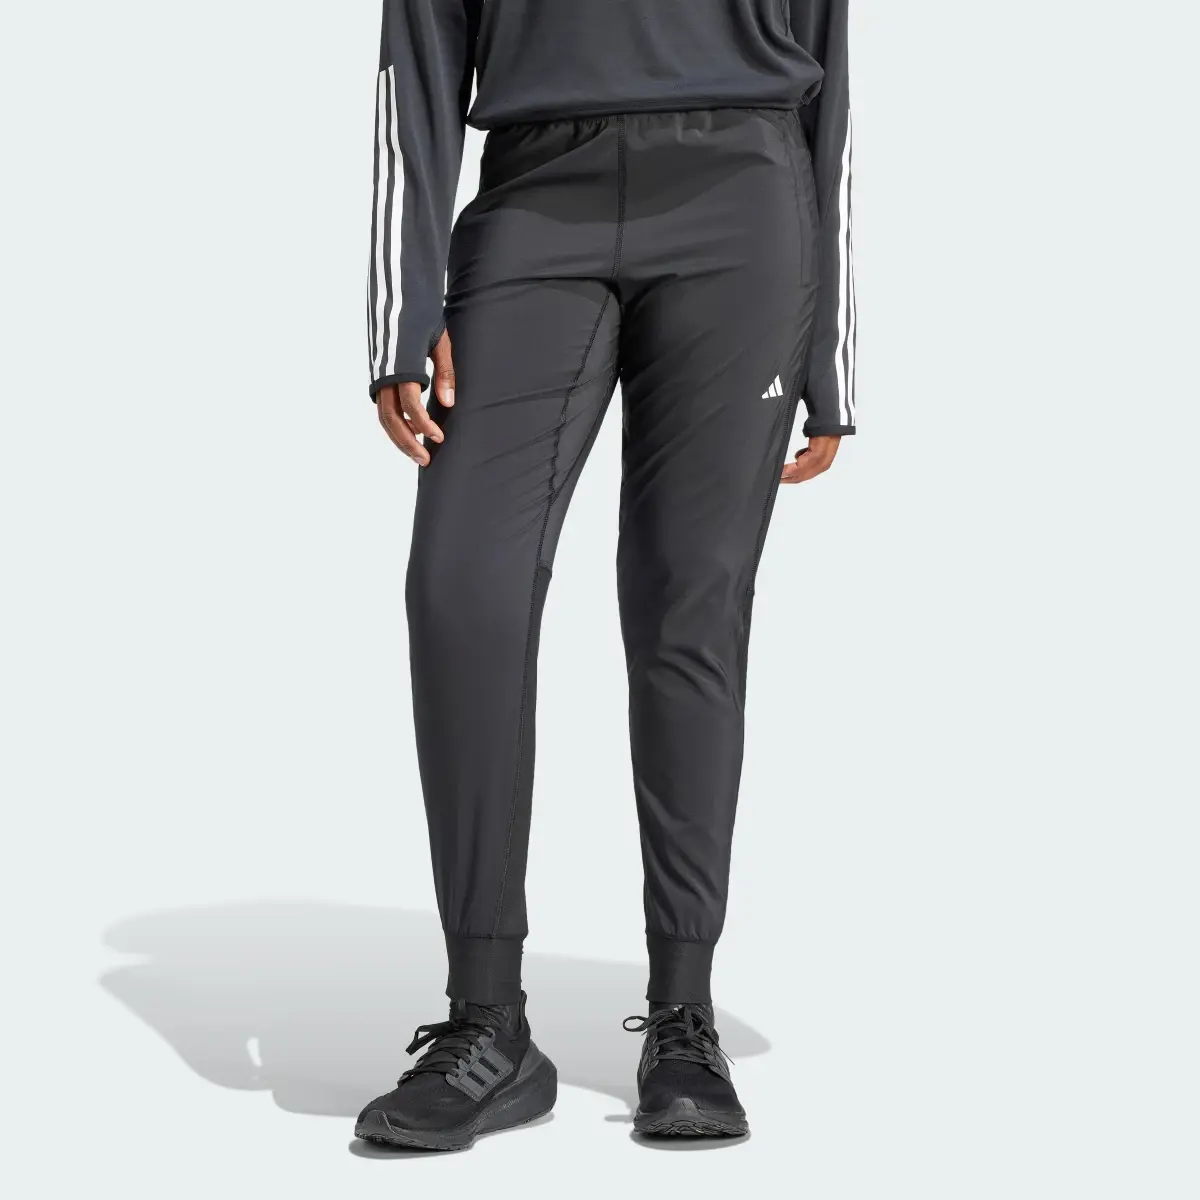 Adidas Own the Run Joggers. 1